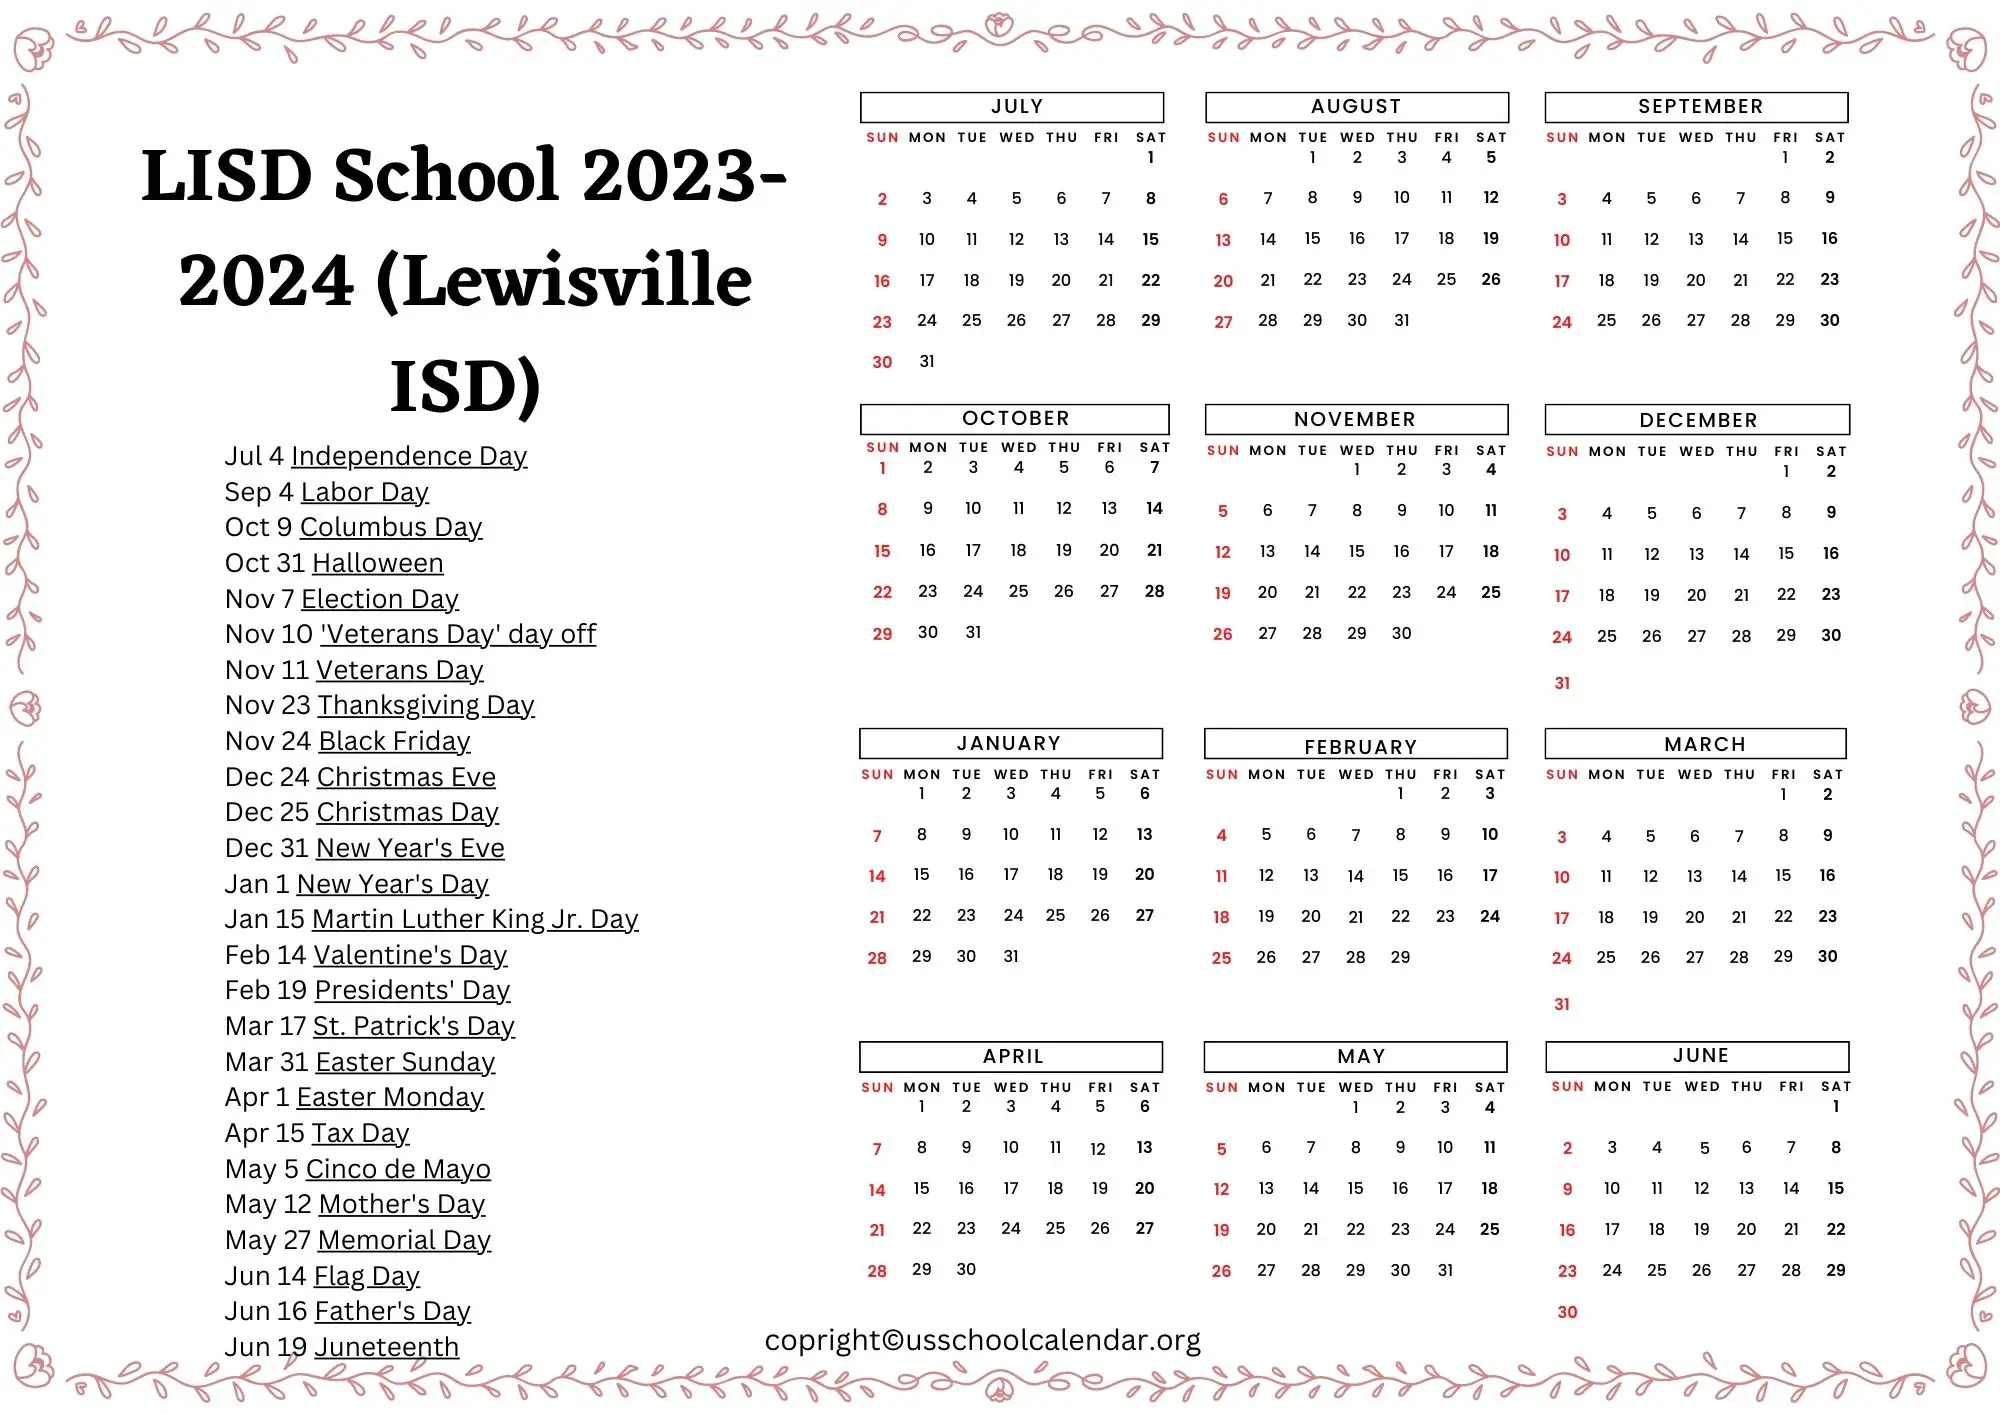 lisd-school-calendar-with-holidays-2023-2024-lewisville-isd